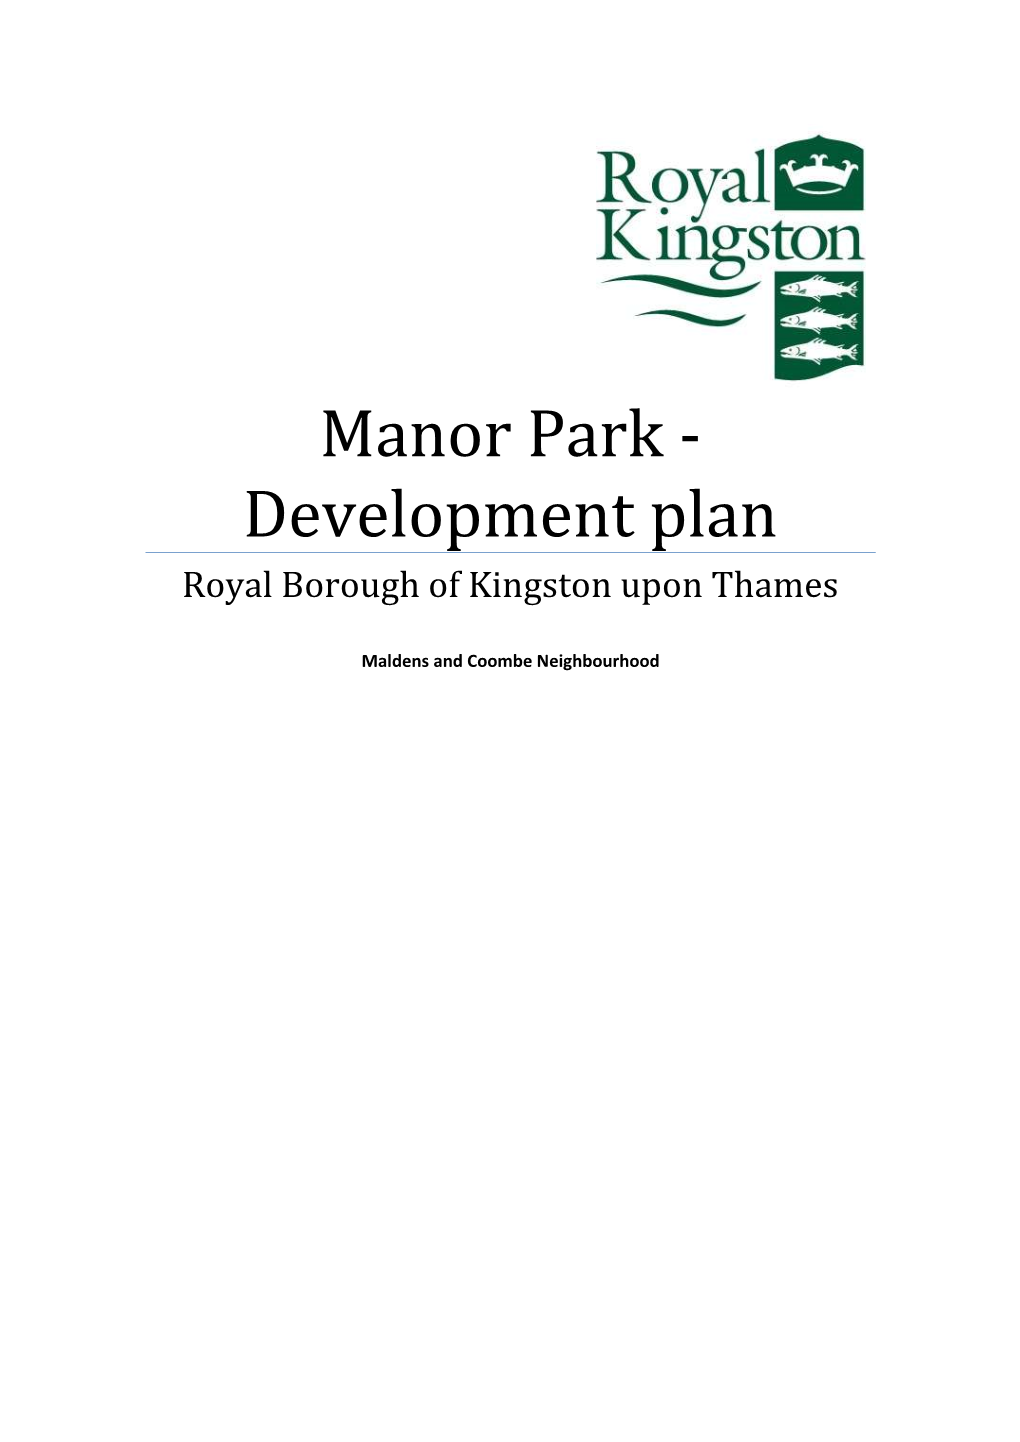 Manor Park - Development Plan Royal Borough of Kingston Upon Thames